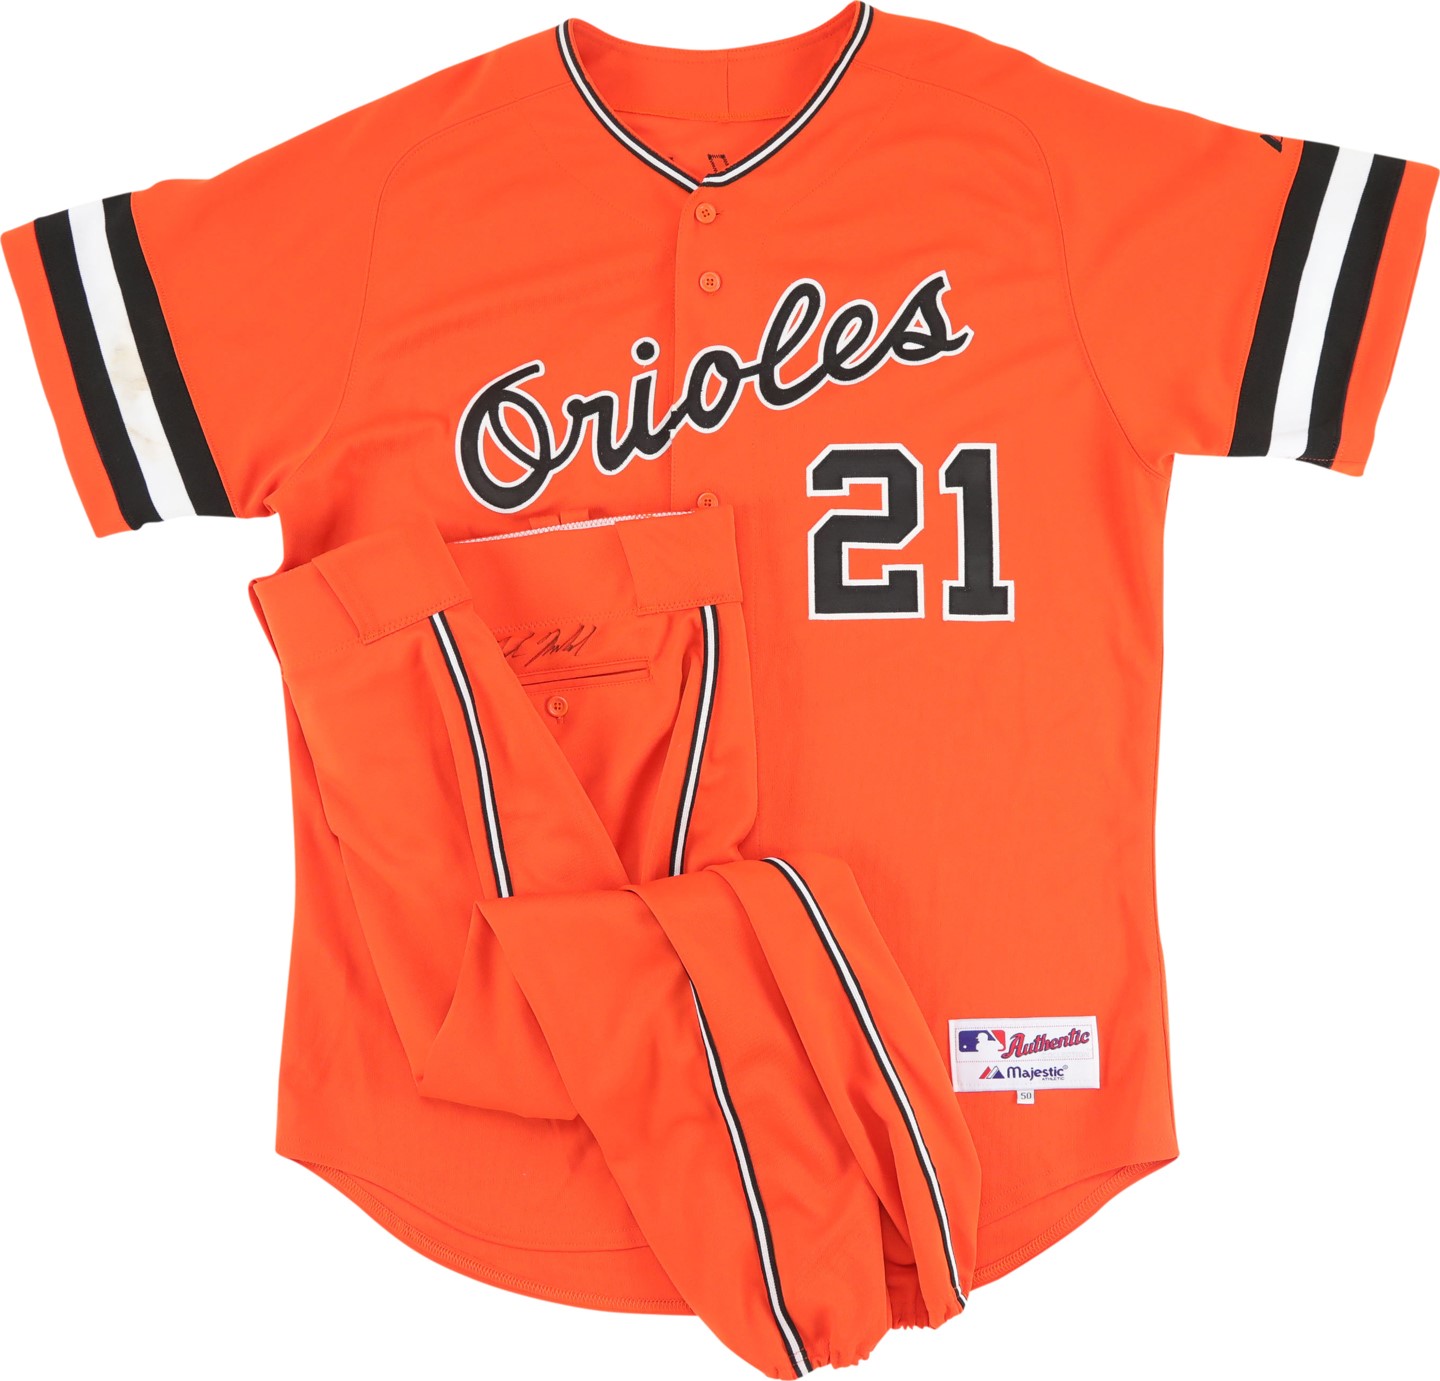 Baseball Equipment - 2010 Nick Markakis Baltimore Orioles Game Worn Throwback Uniform (MLB Authentic)